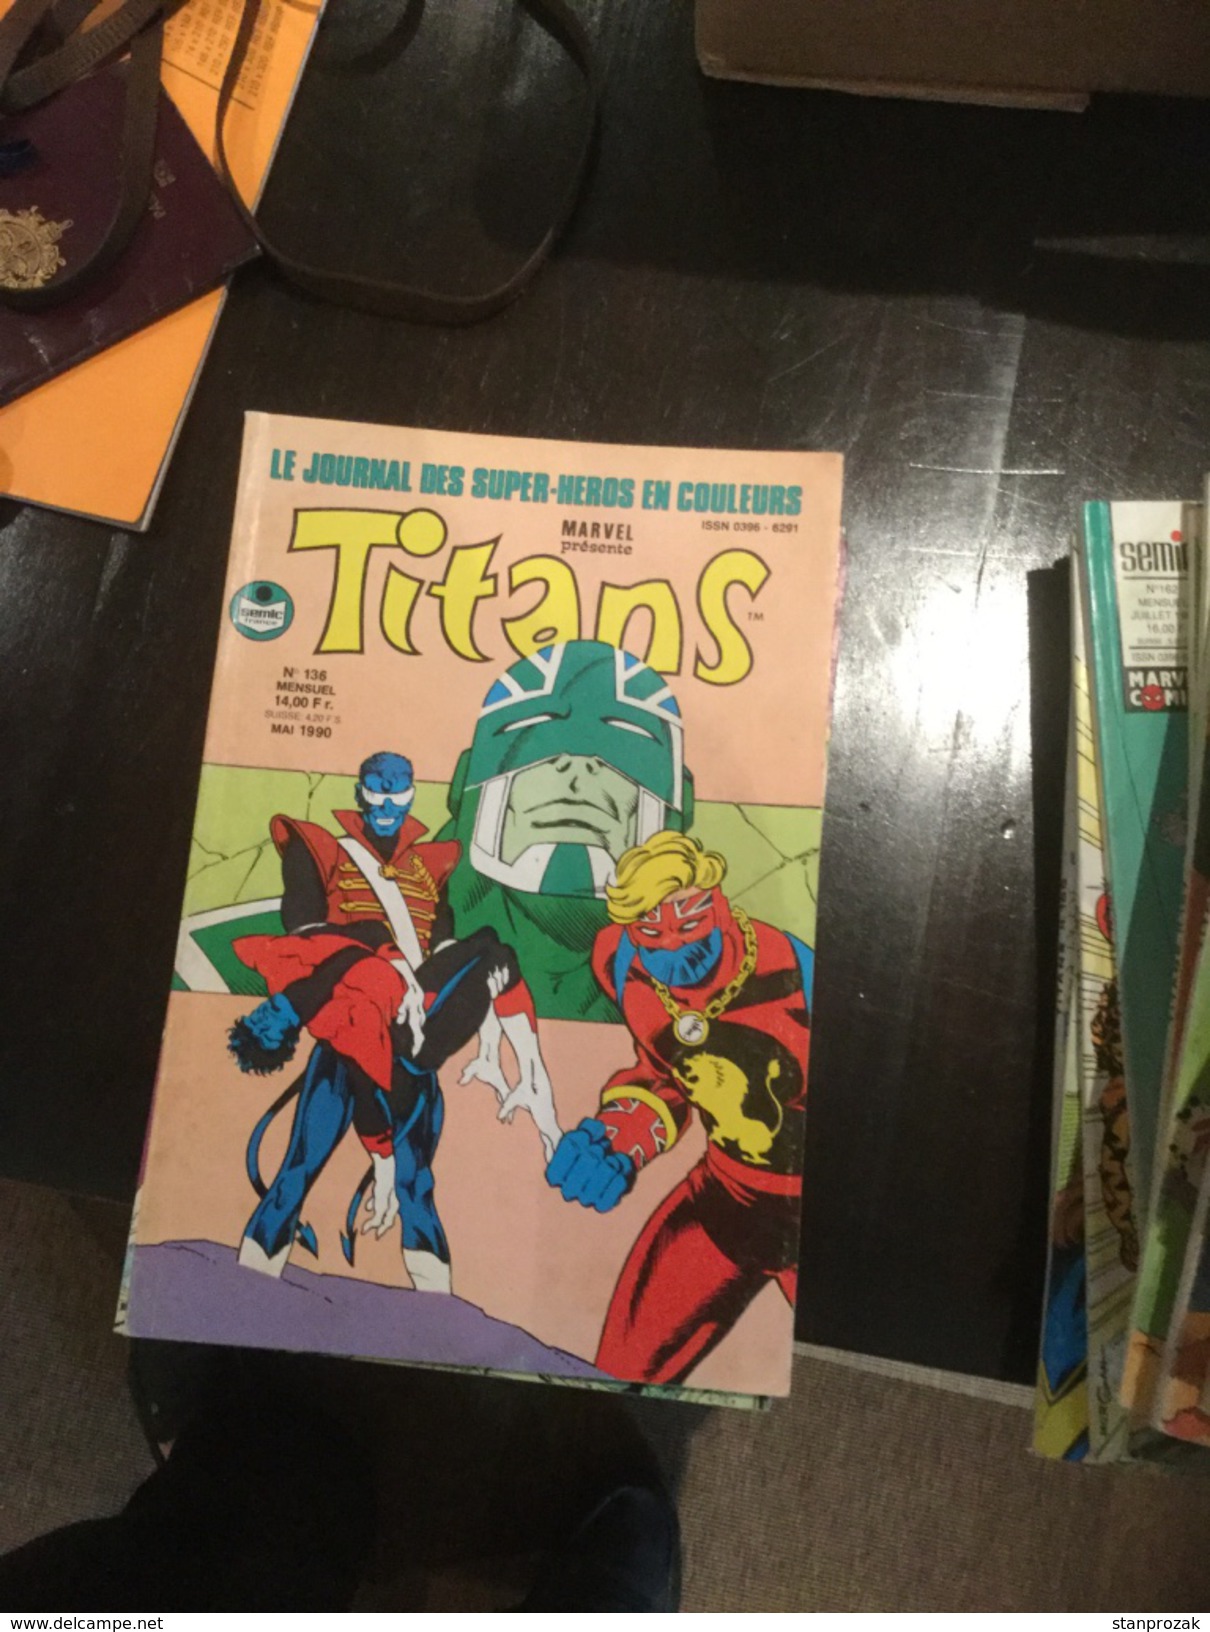 Titans 136 - Titans